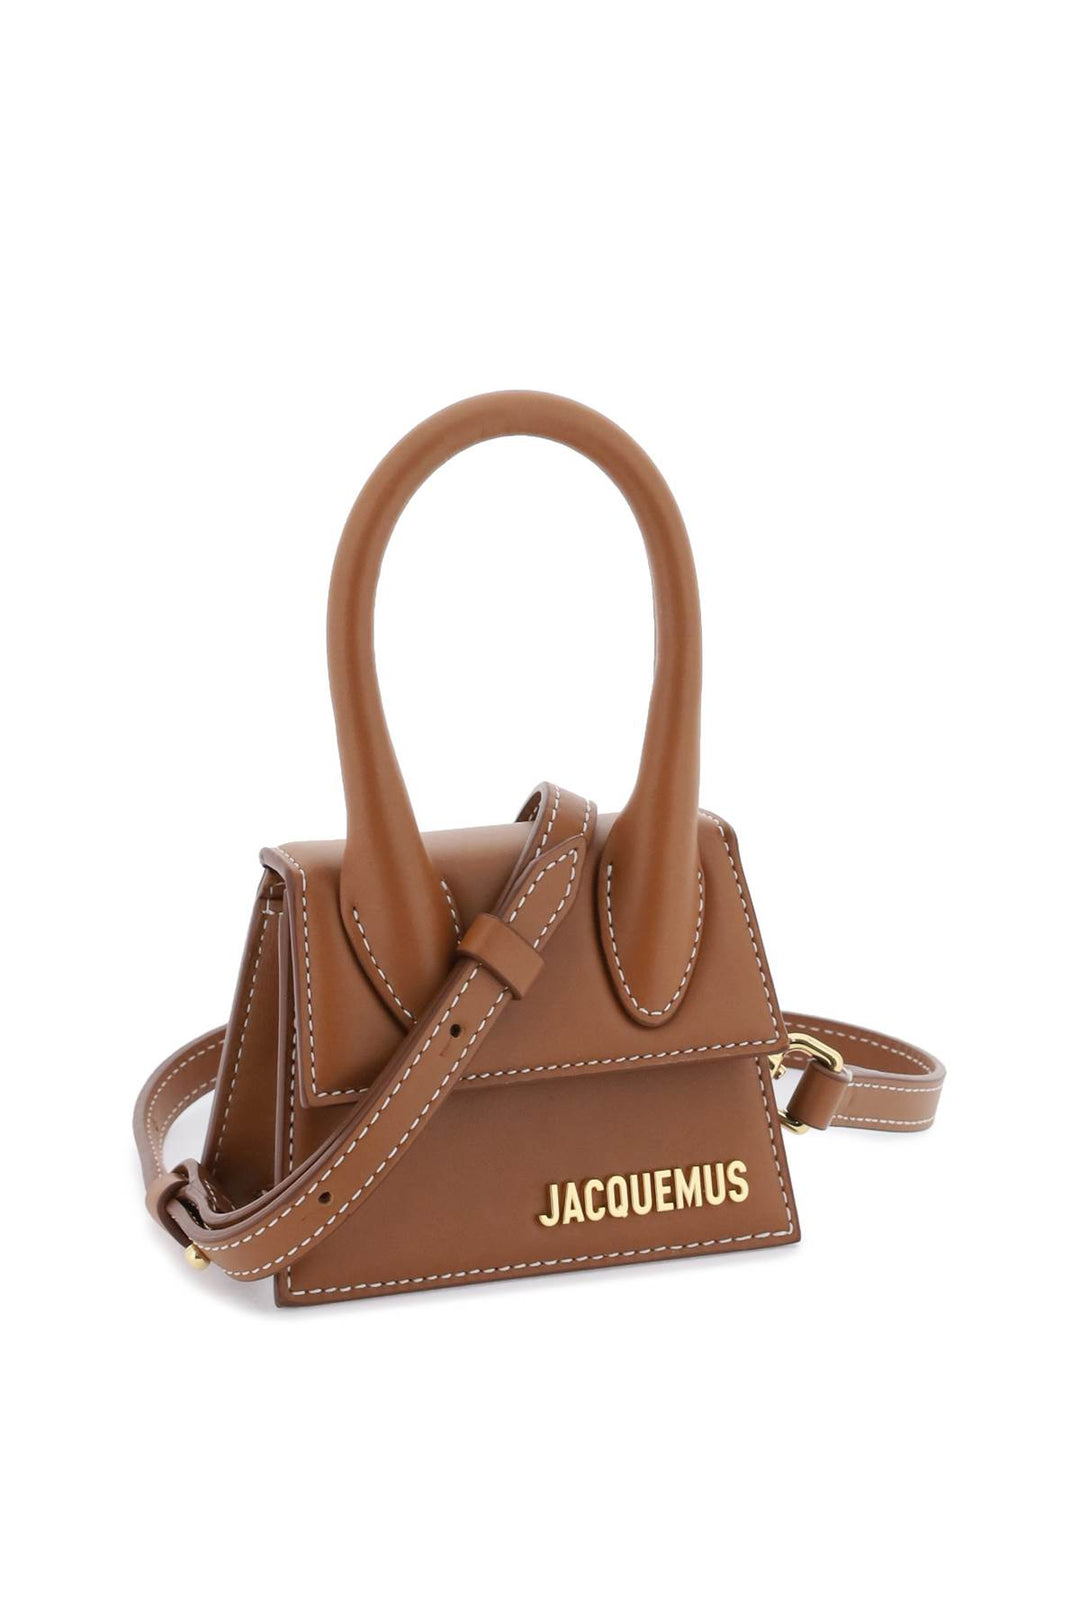 Jacquemus 'Le Chiquito' Micro Bag   Marrone